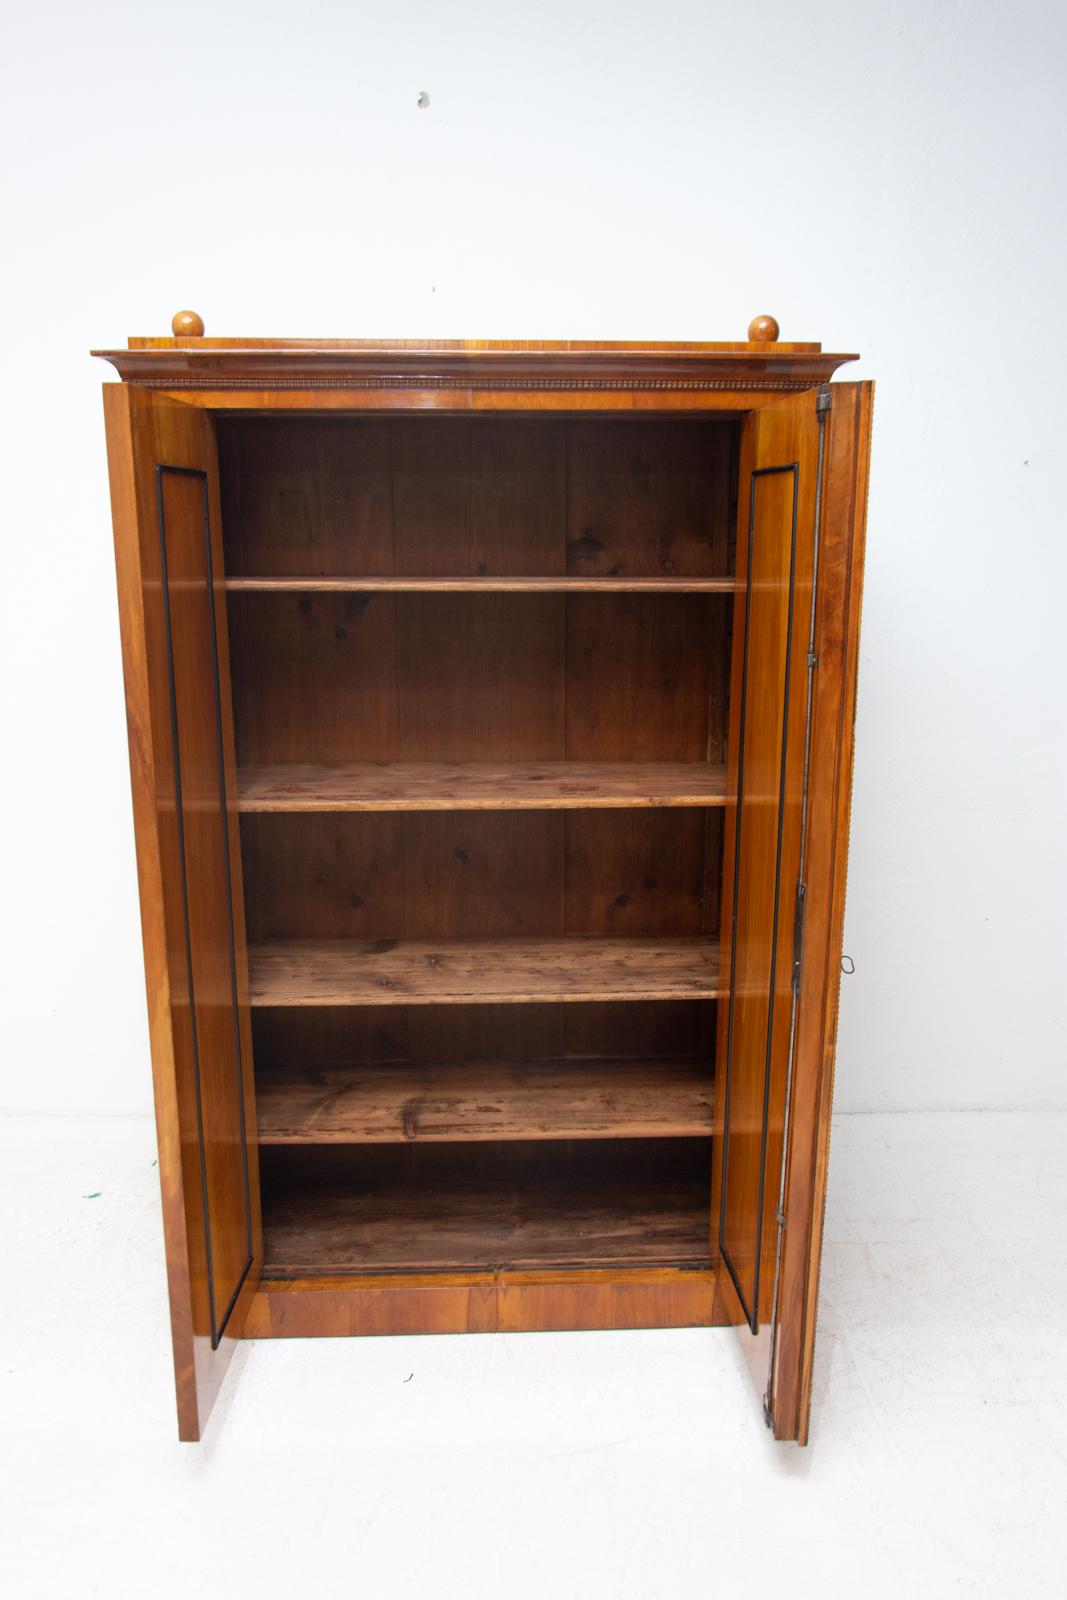 Antique Biedermeier Shelf Cabinet-Wardrobe, 1830s, Austria-Hungary For Sale 1